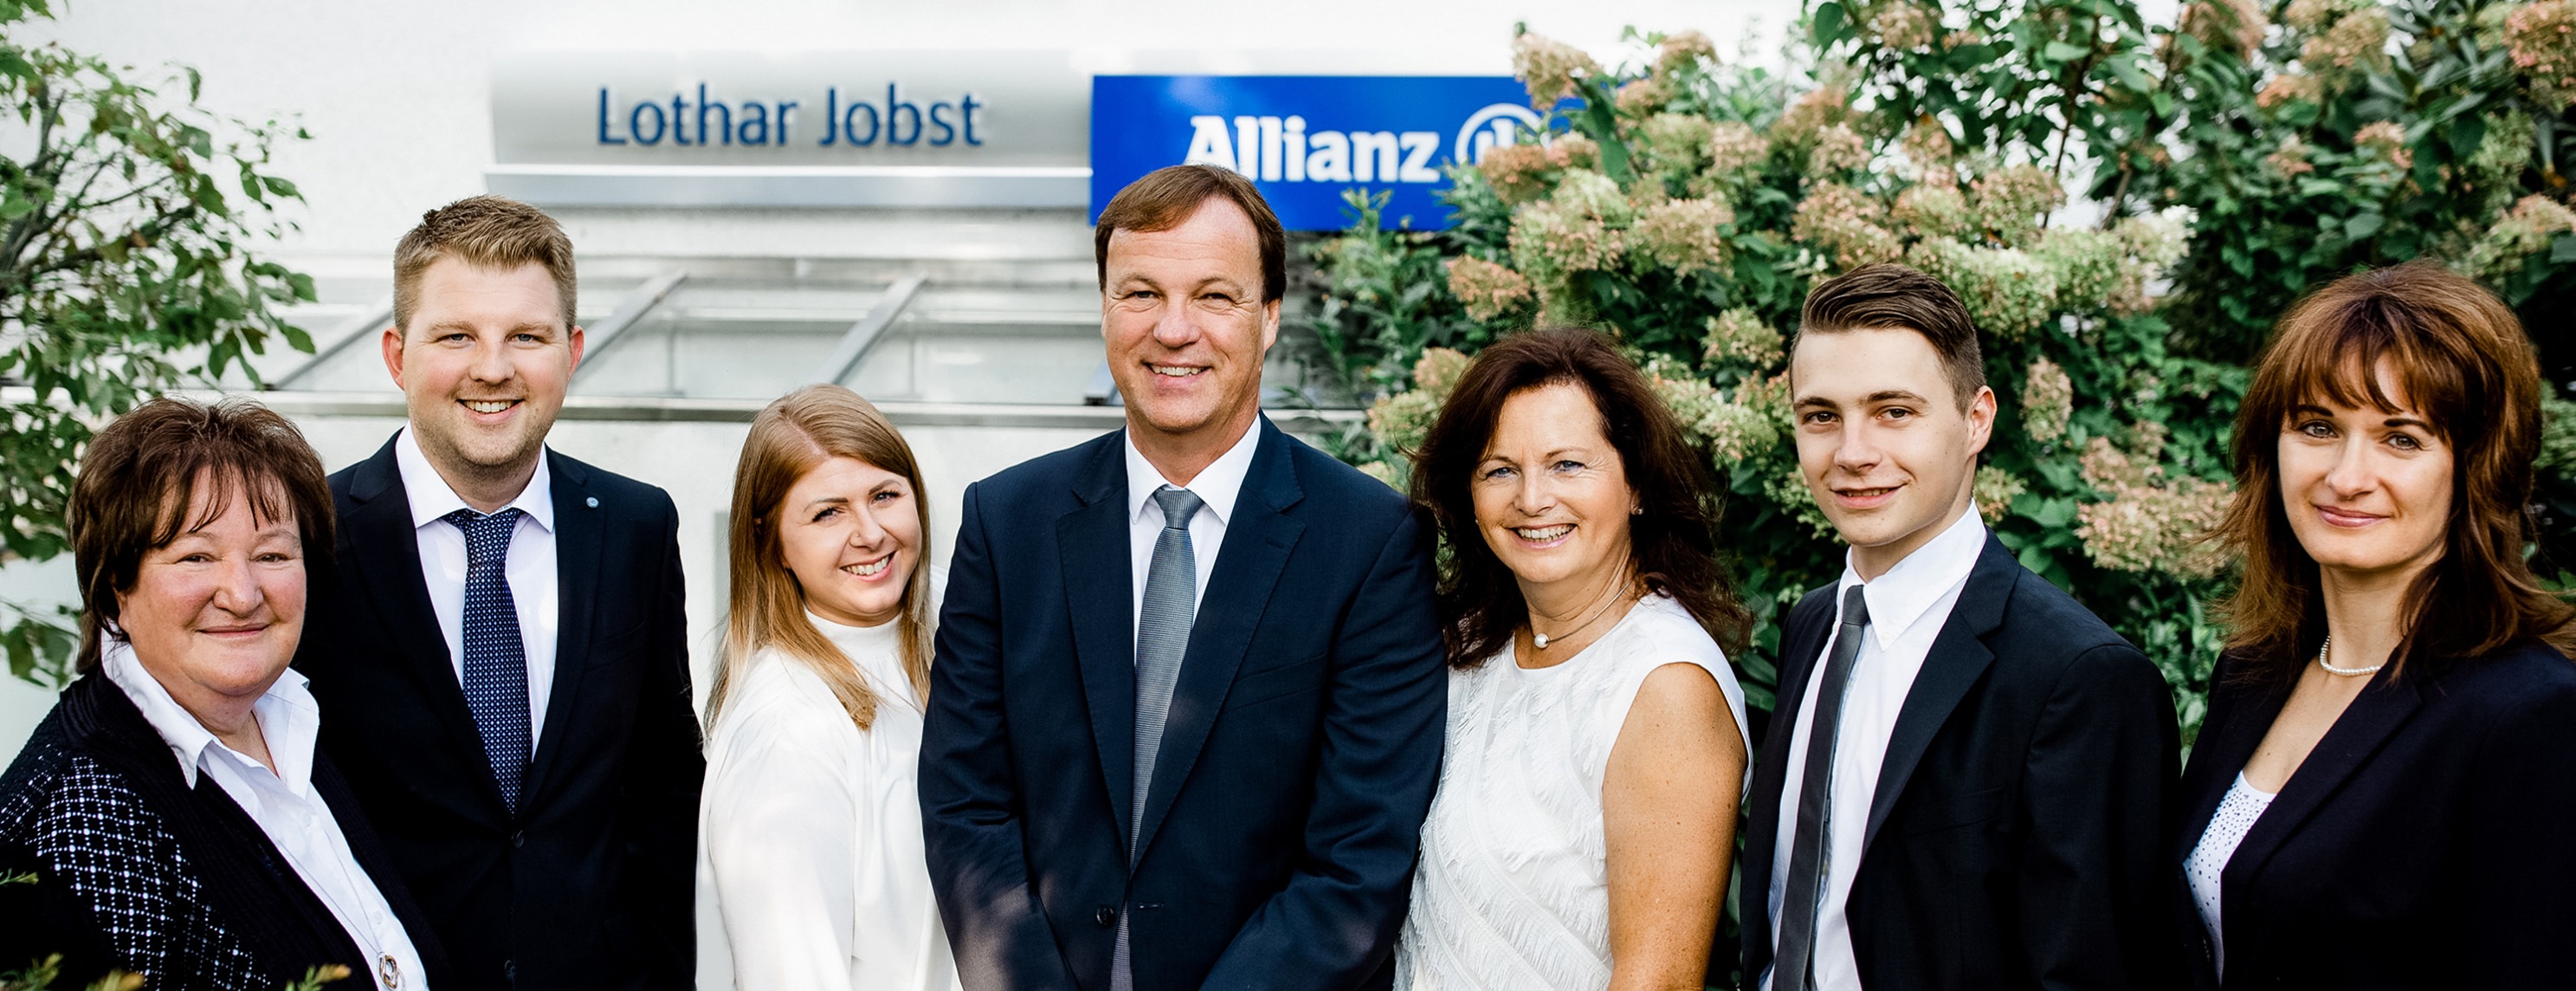 Allianz Versicherung Lothar Jobst Neukirchen-Balbini - Ihre Versicherungsexperten